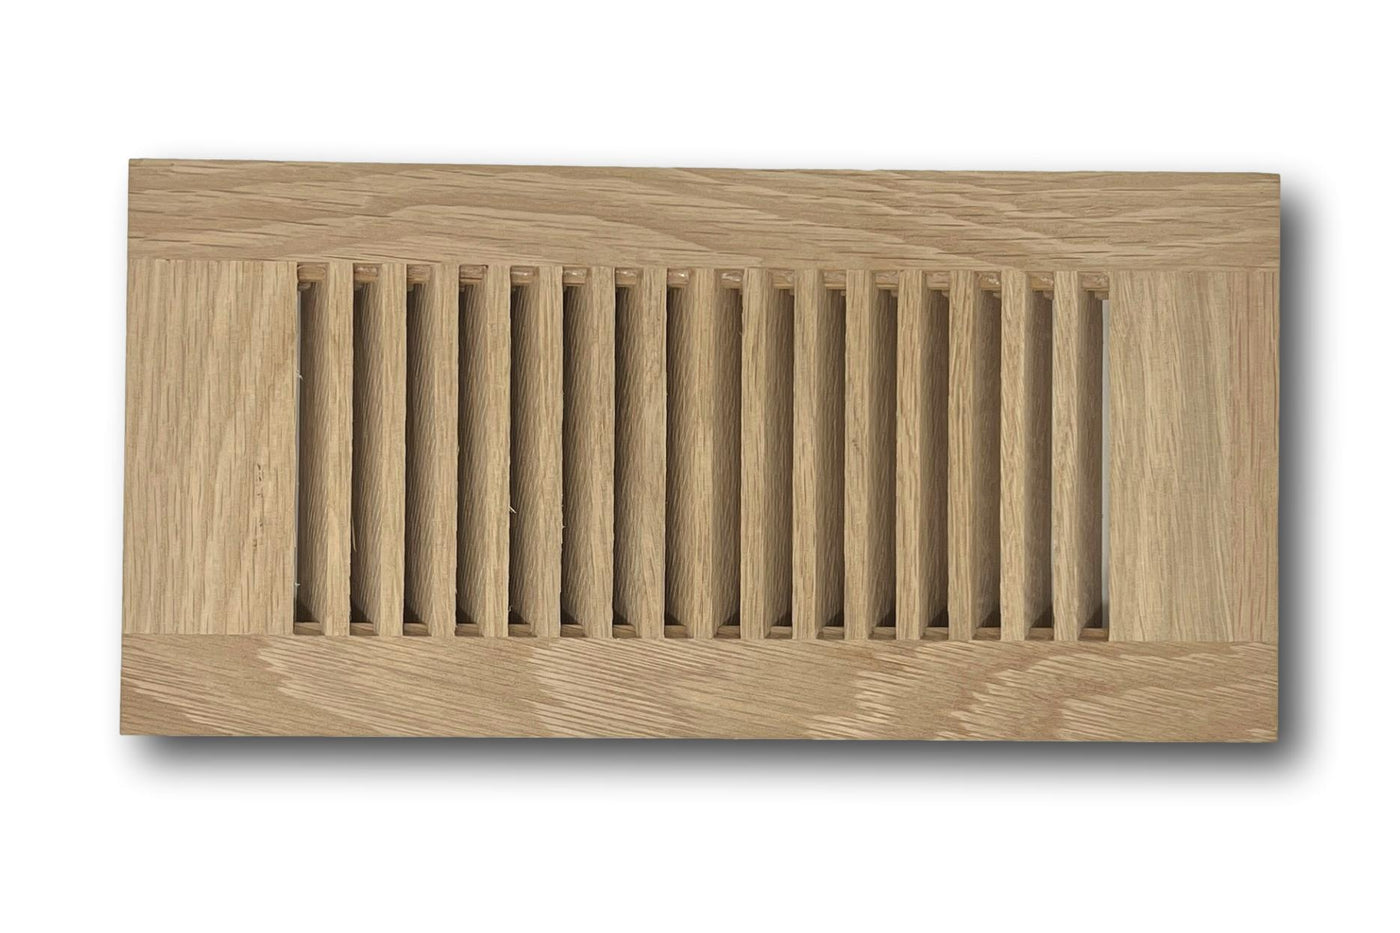 4" x 10" White Oak Wood Vent Cover - Flush No Frame (Unfinished)